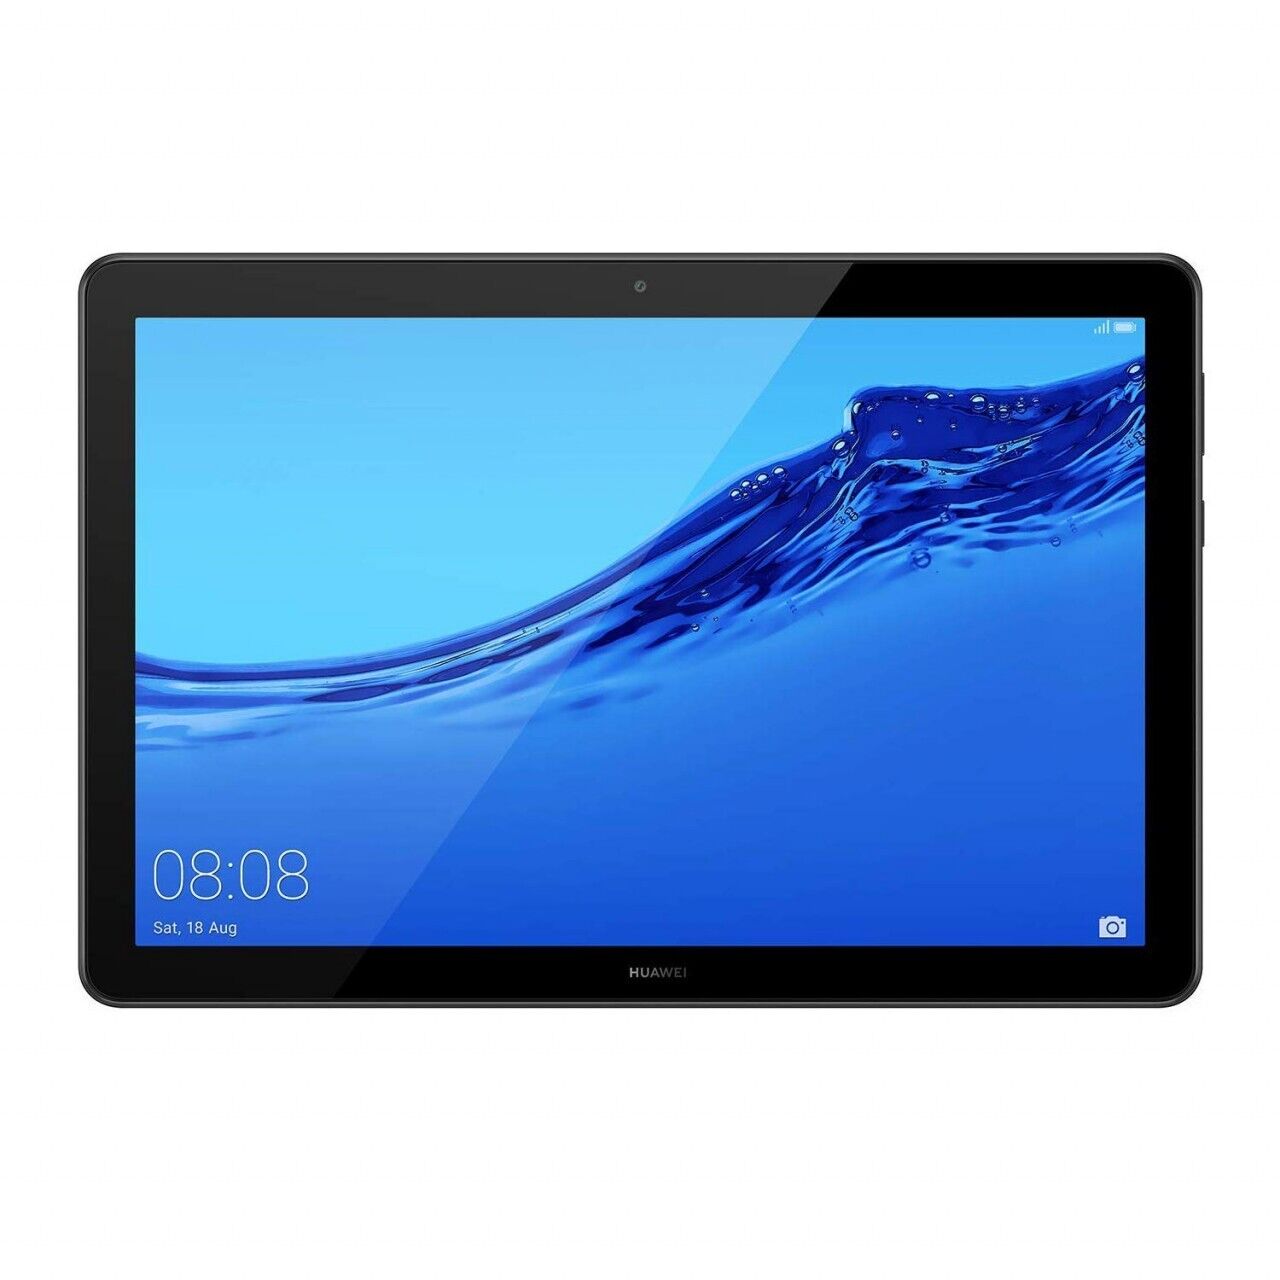 Huawei-Mediapad-T5-32-GB-WiFi-10-Tablet-Black-165618897318